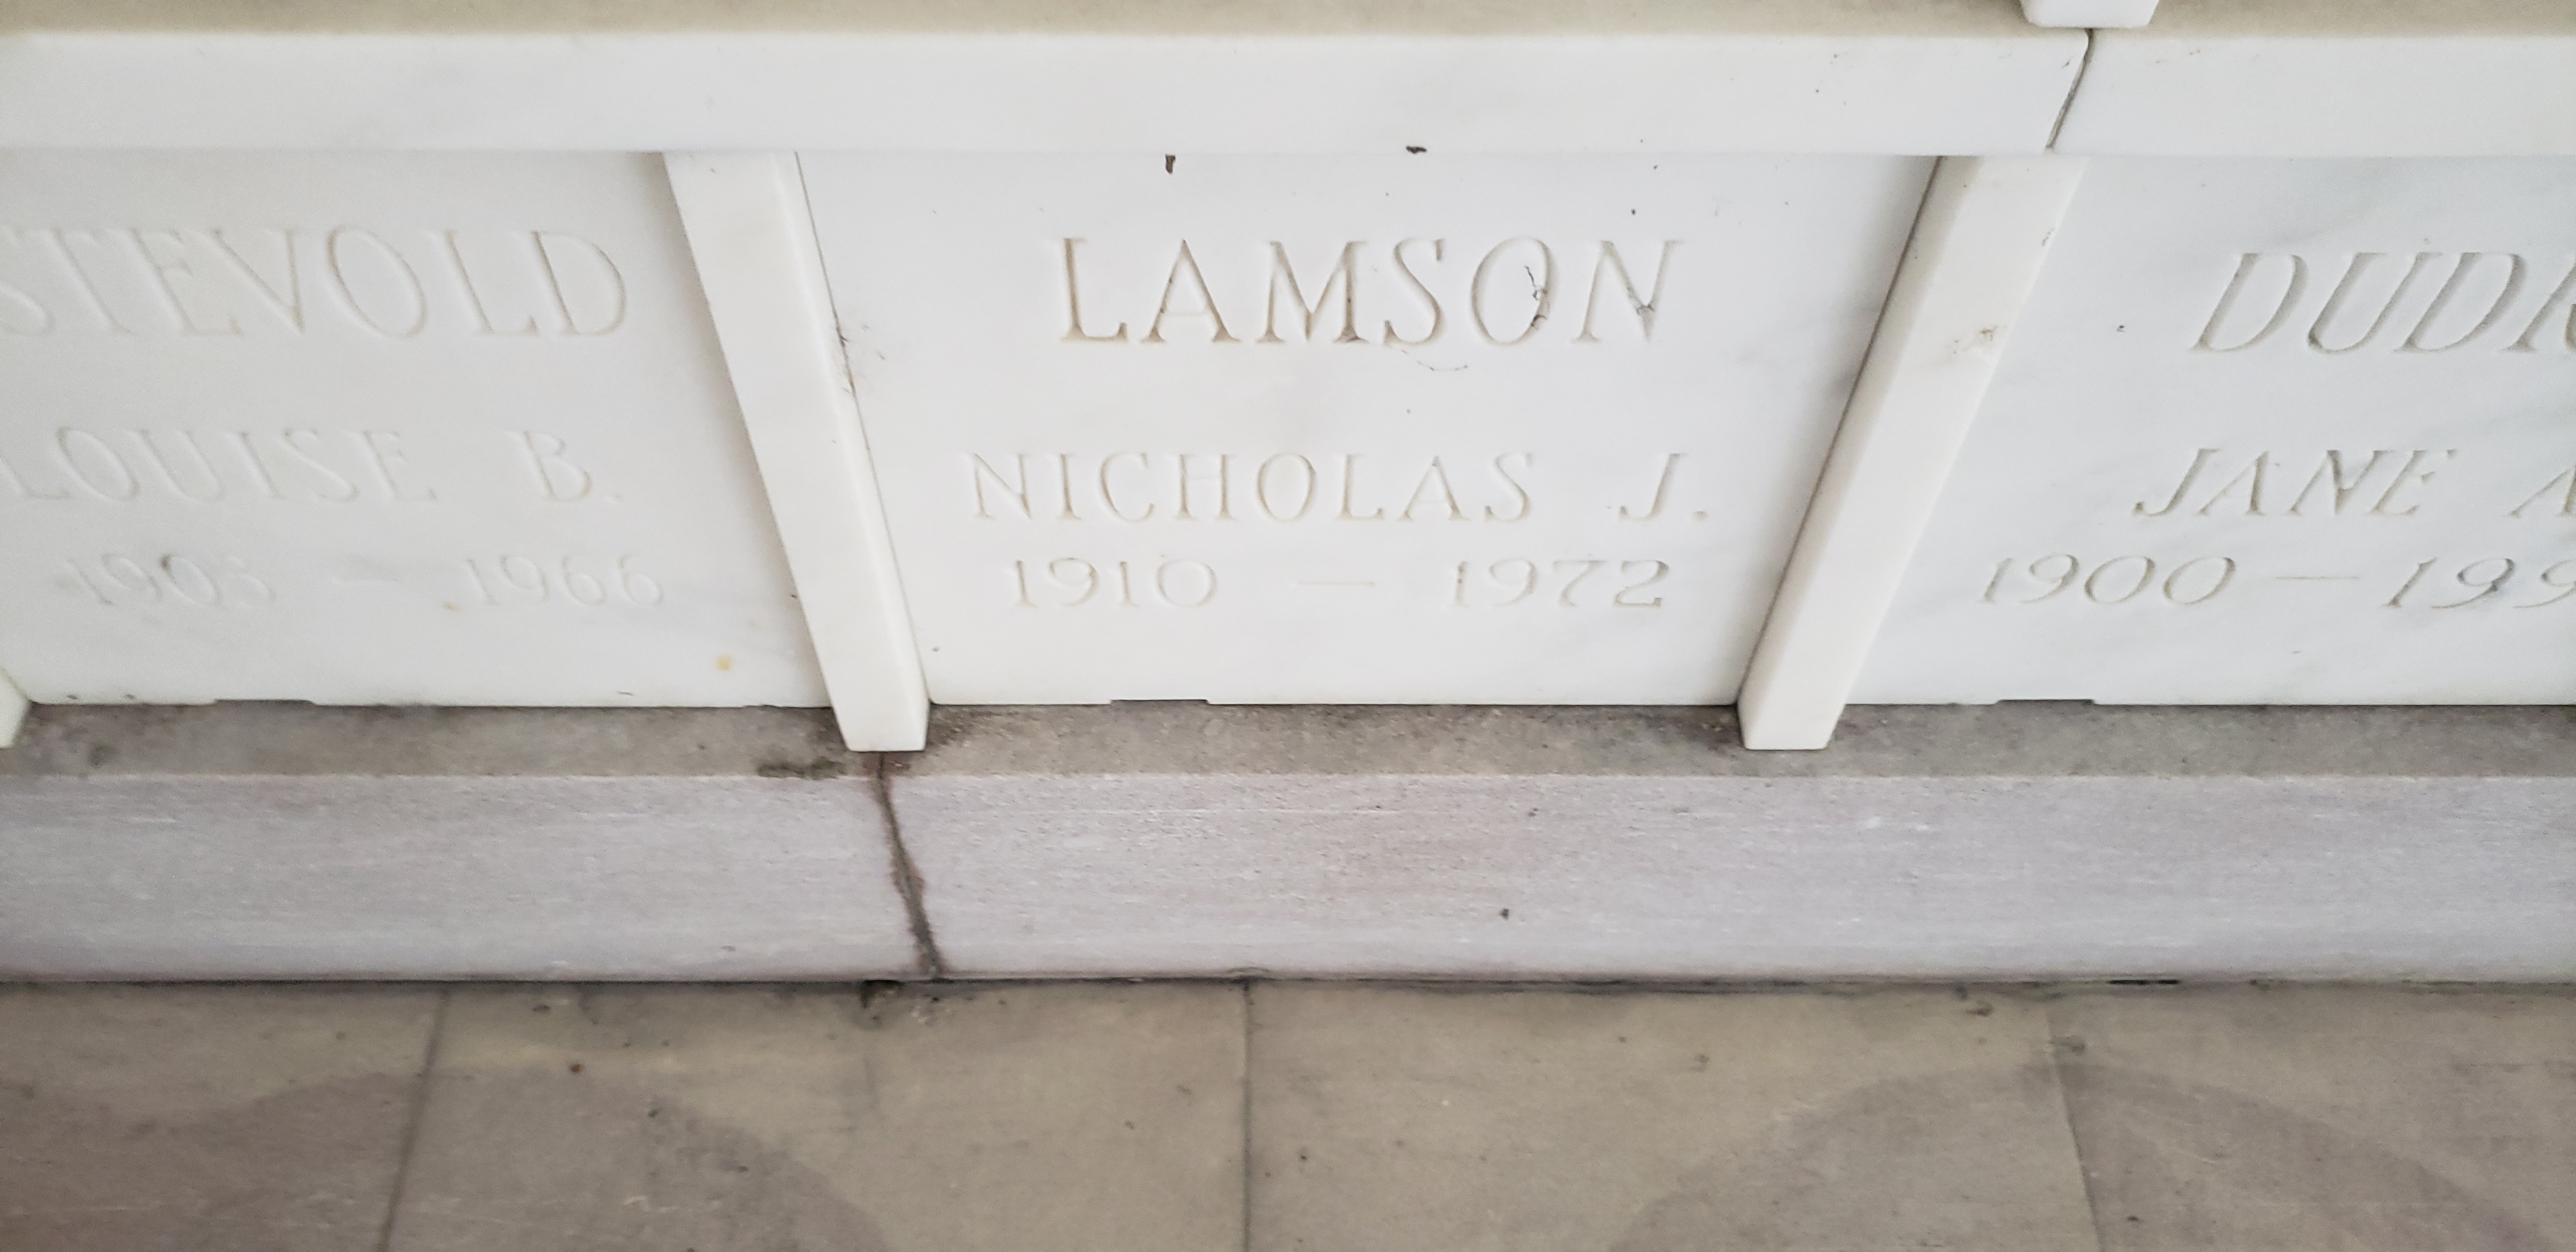 Nicholas J Lamson